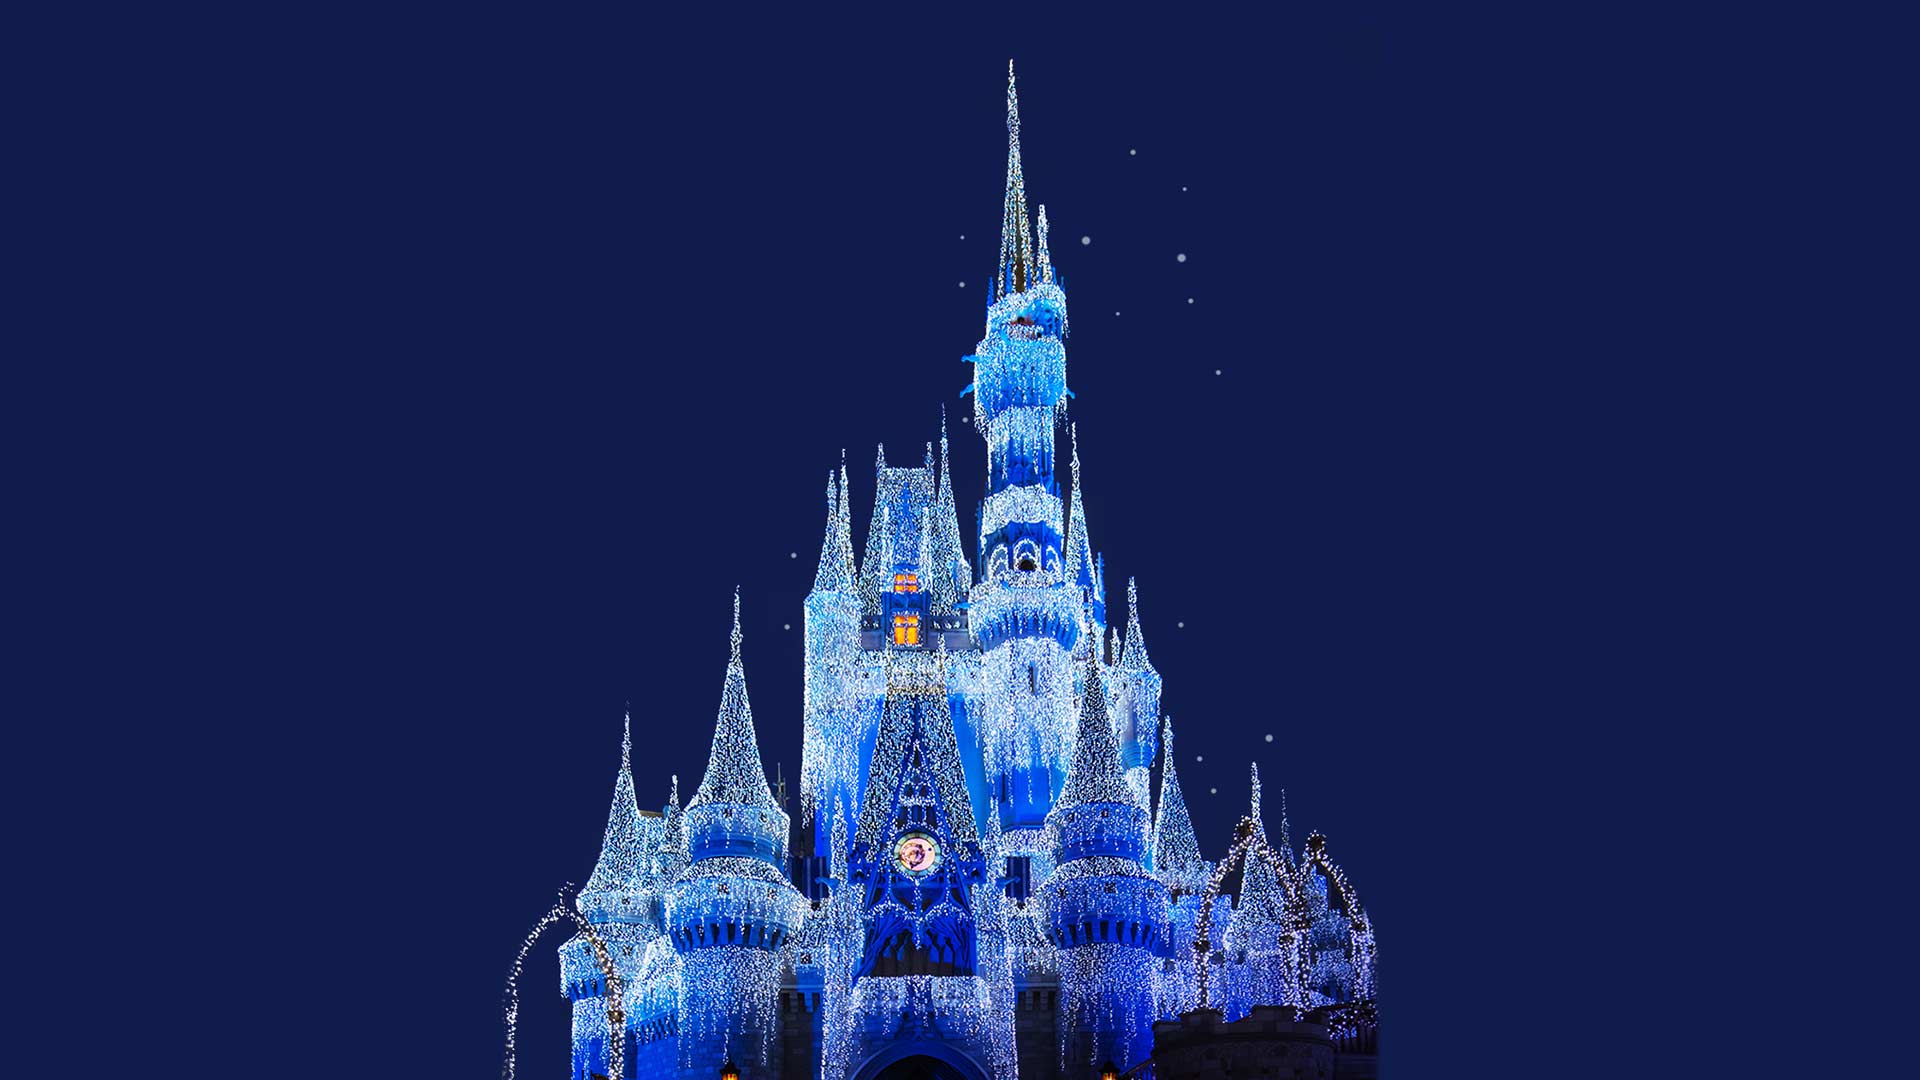 Disney's Fairy Tale Weddings - Disney+